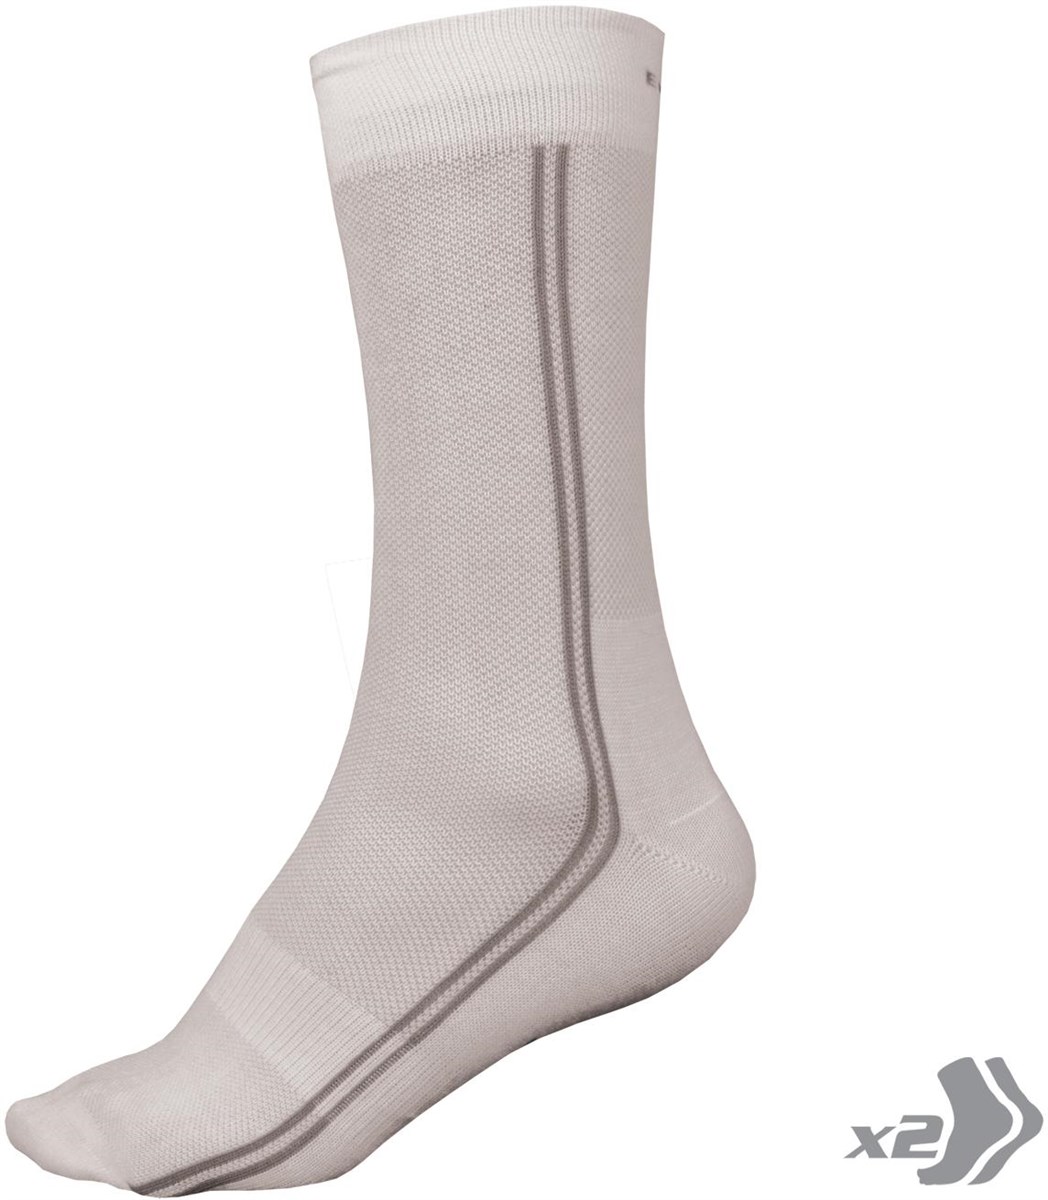 Endura Coolmax Cycling Long Socks - Twinpack product image